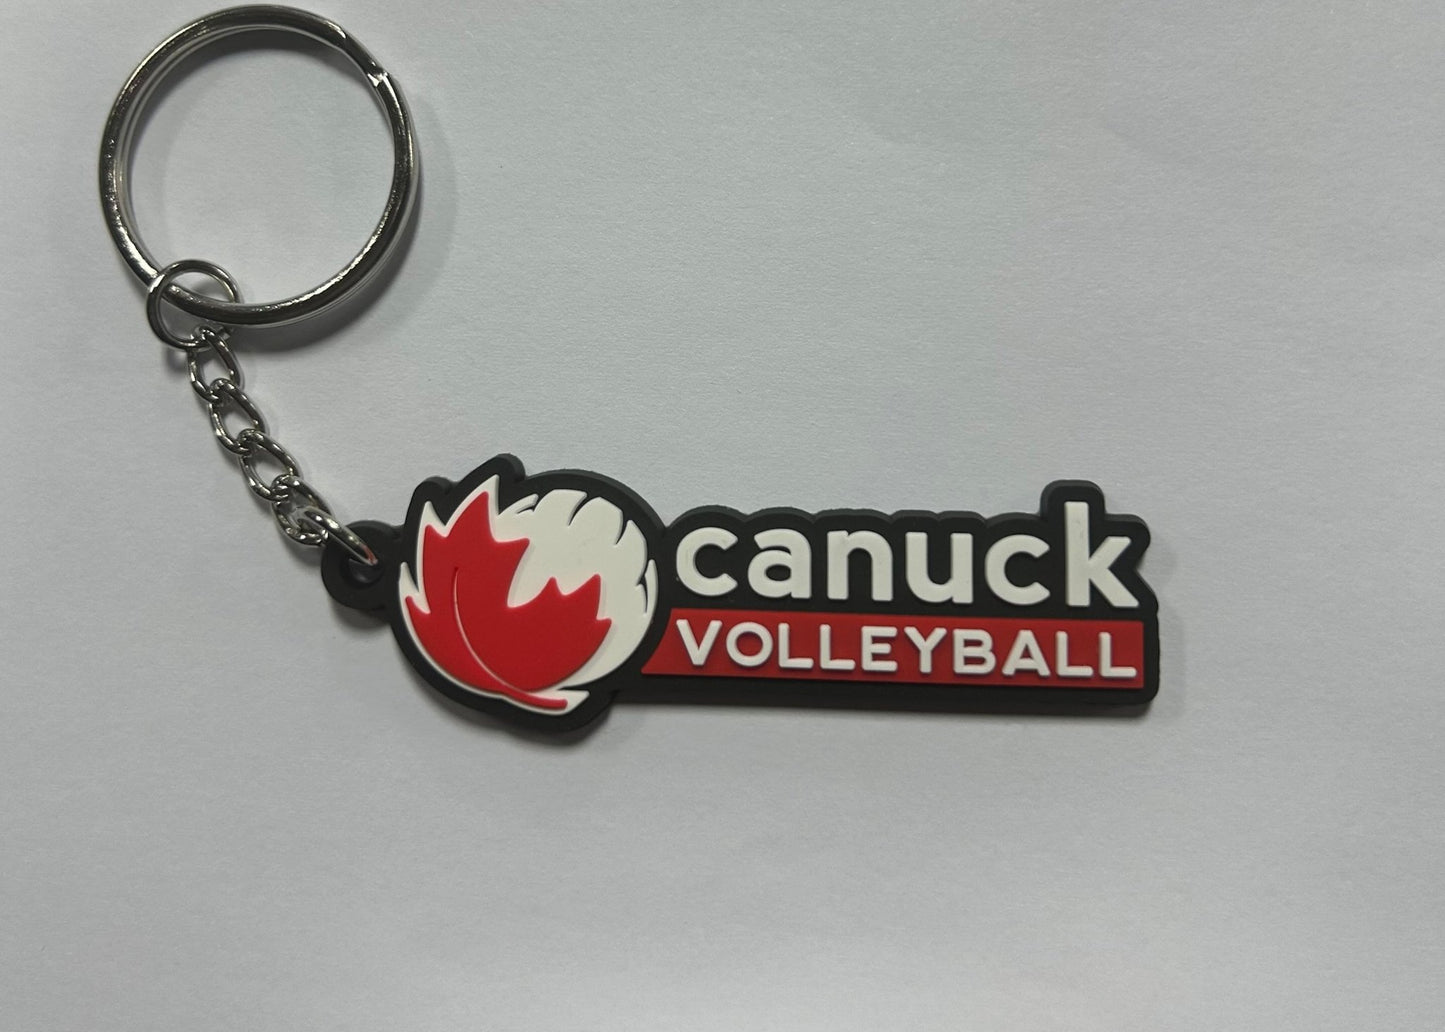 Canuck Volleyball Text Keychain - Oddball Workshop